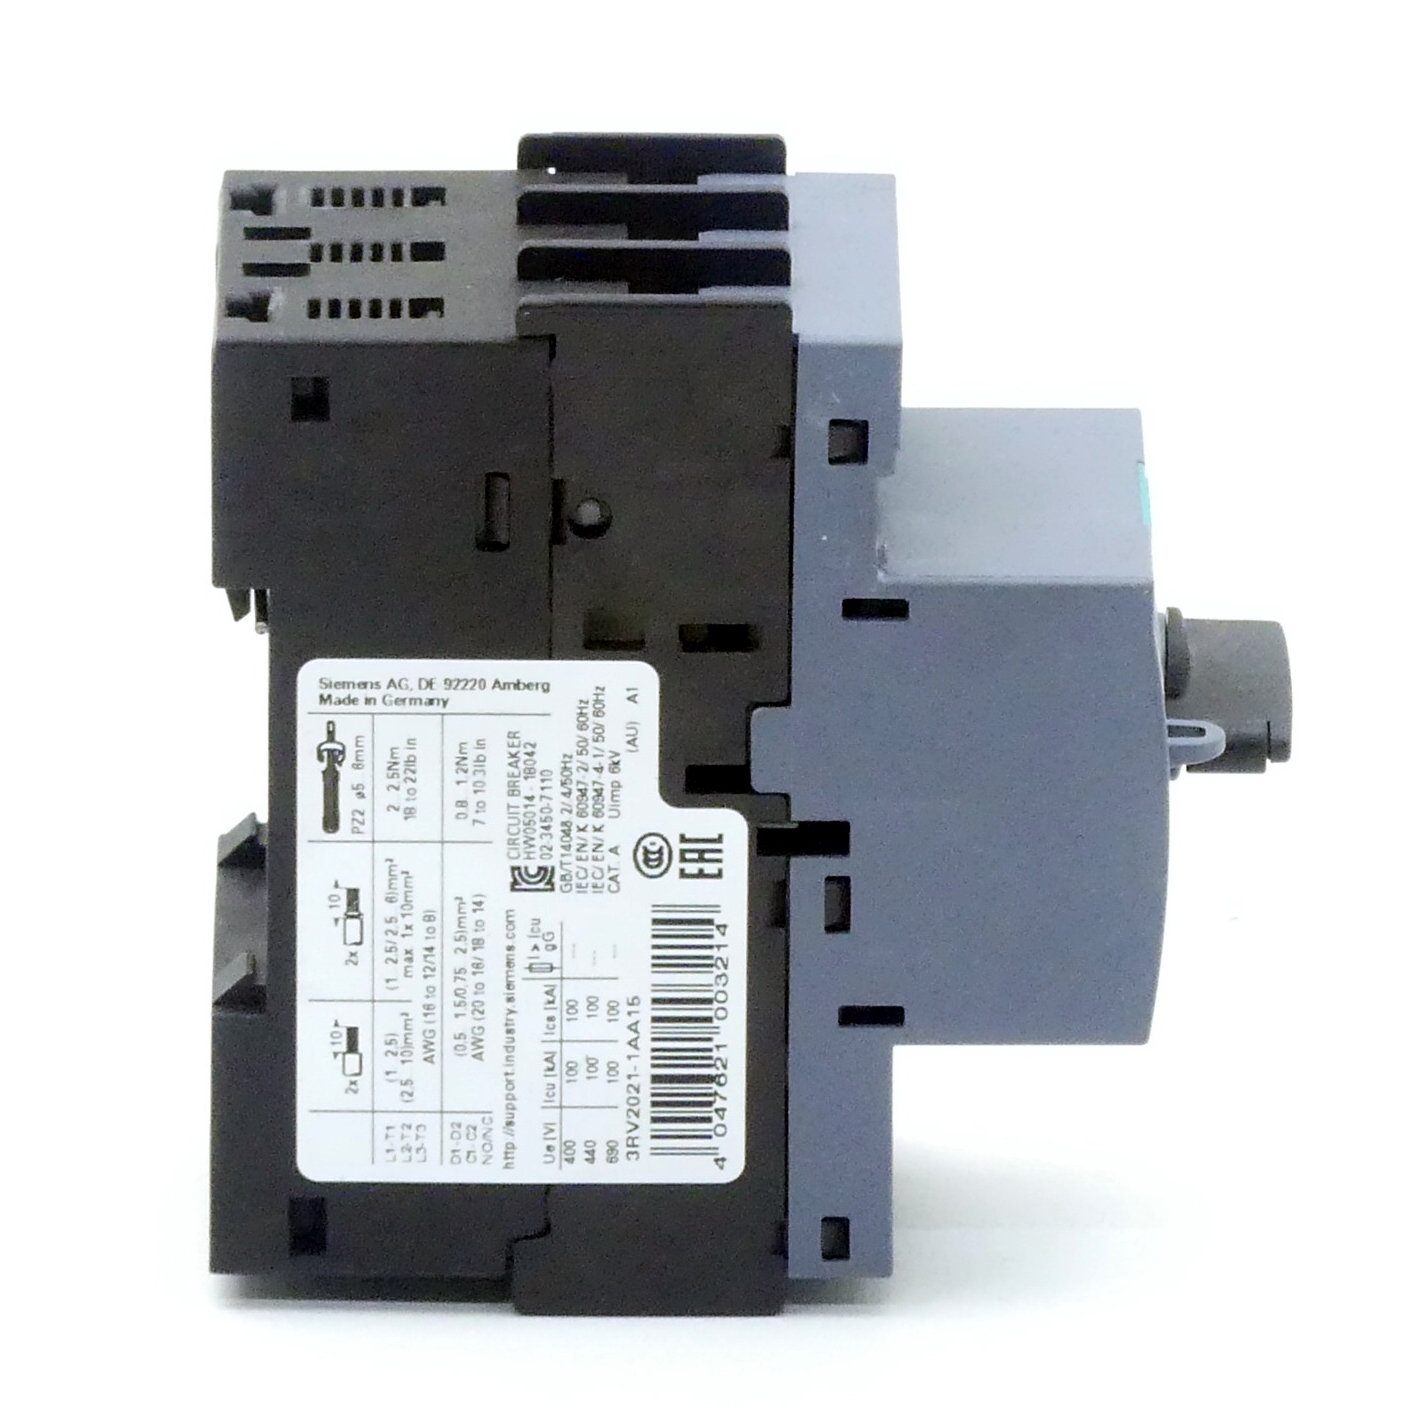 Circuit breaker 3RV2021-1AA15 